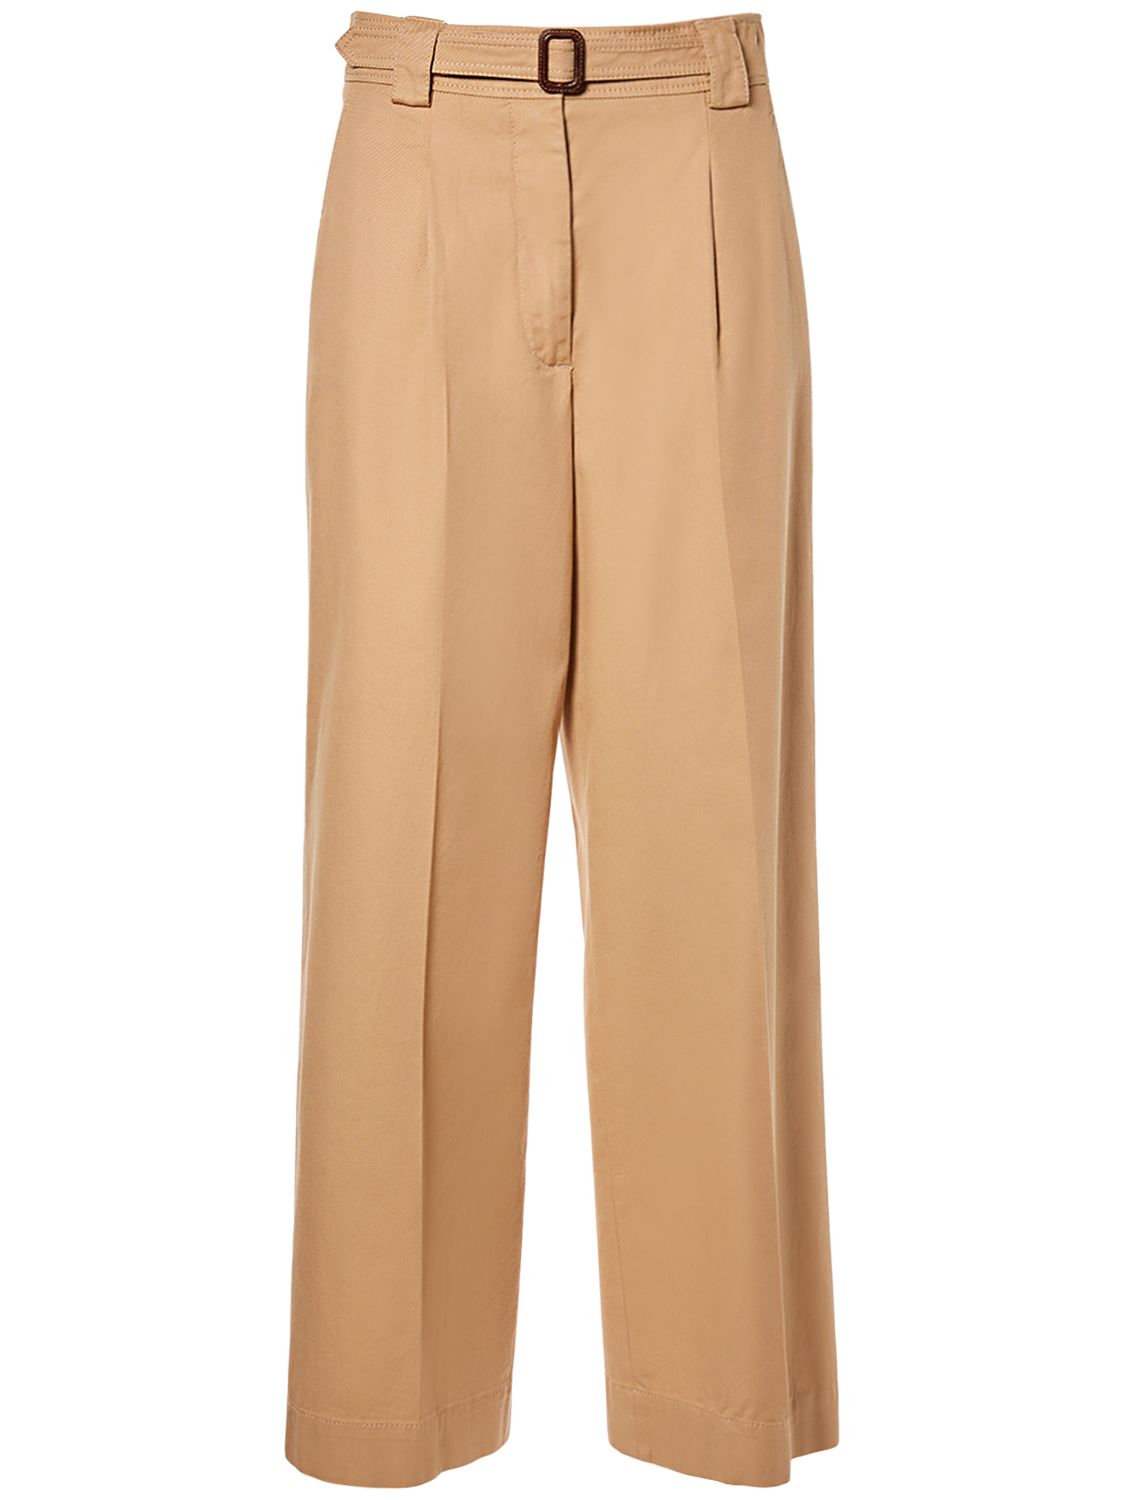 pantalon ample en toile de coton & ceinture pino